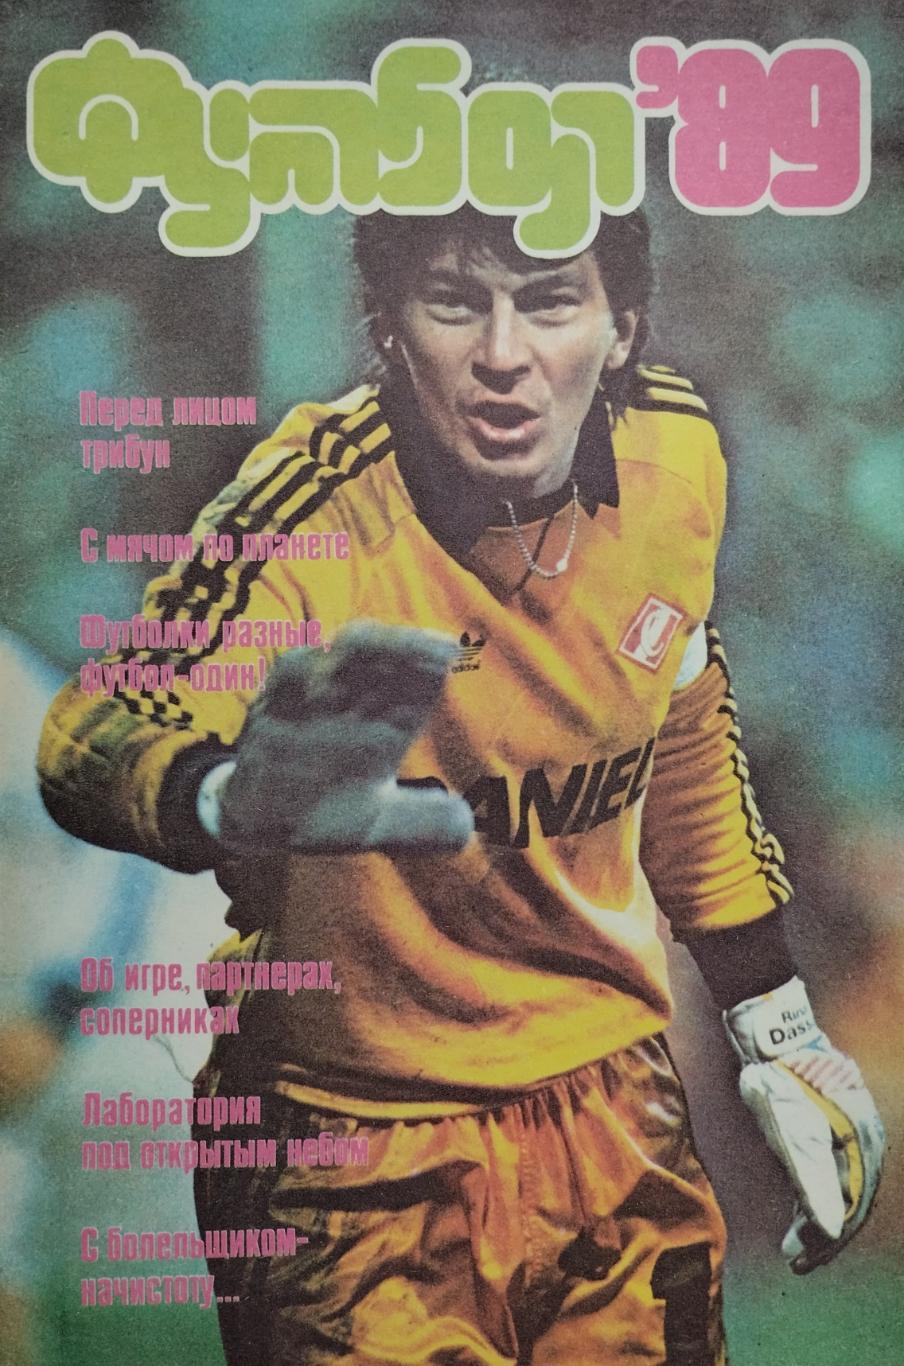 Футбол - 89: Альманах. Л. Г. Лебедев. 1989. 160 стр.